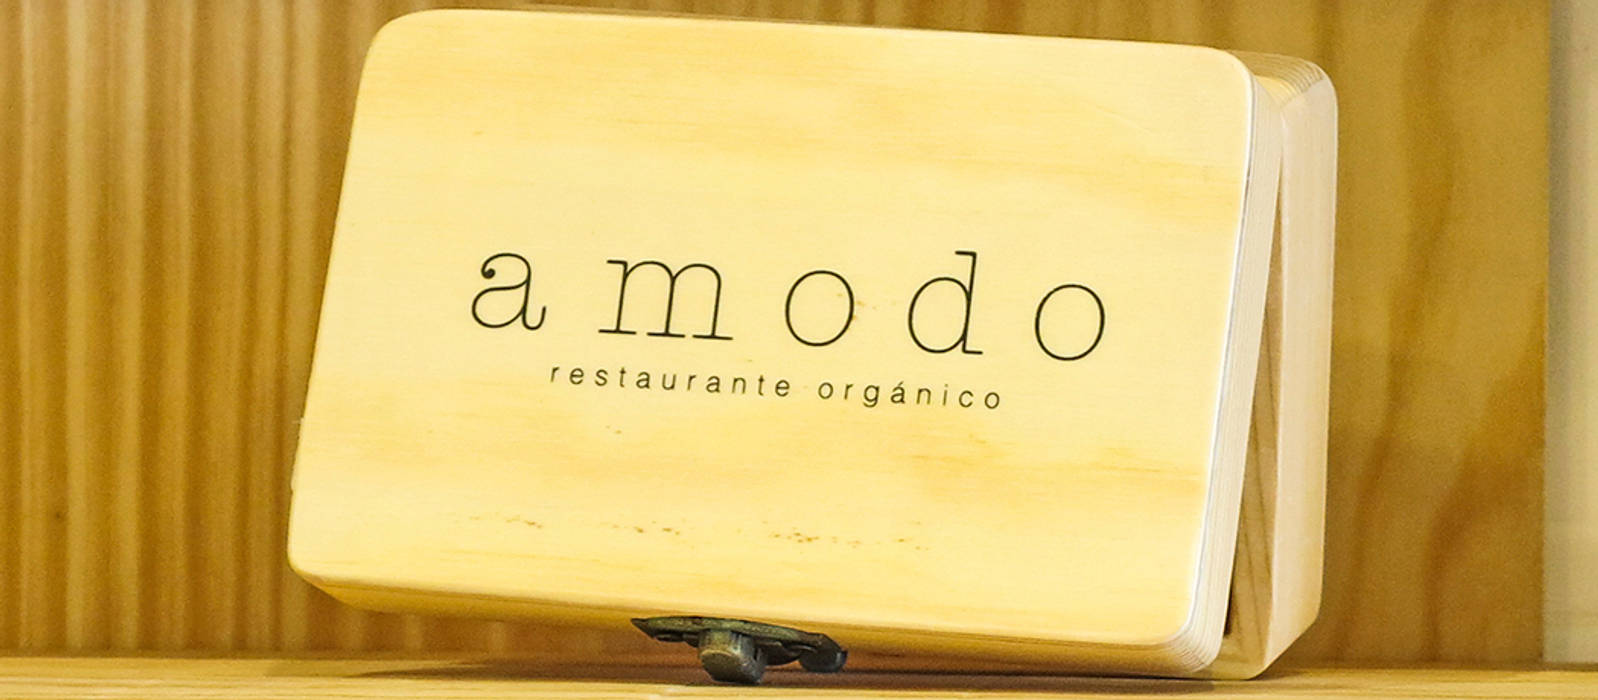 Amodo Restaurante Organico, ADC Espacios ADC Espacios Commercial spaces Gastronomy